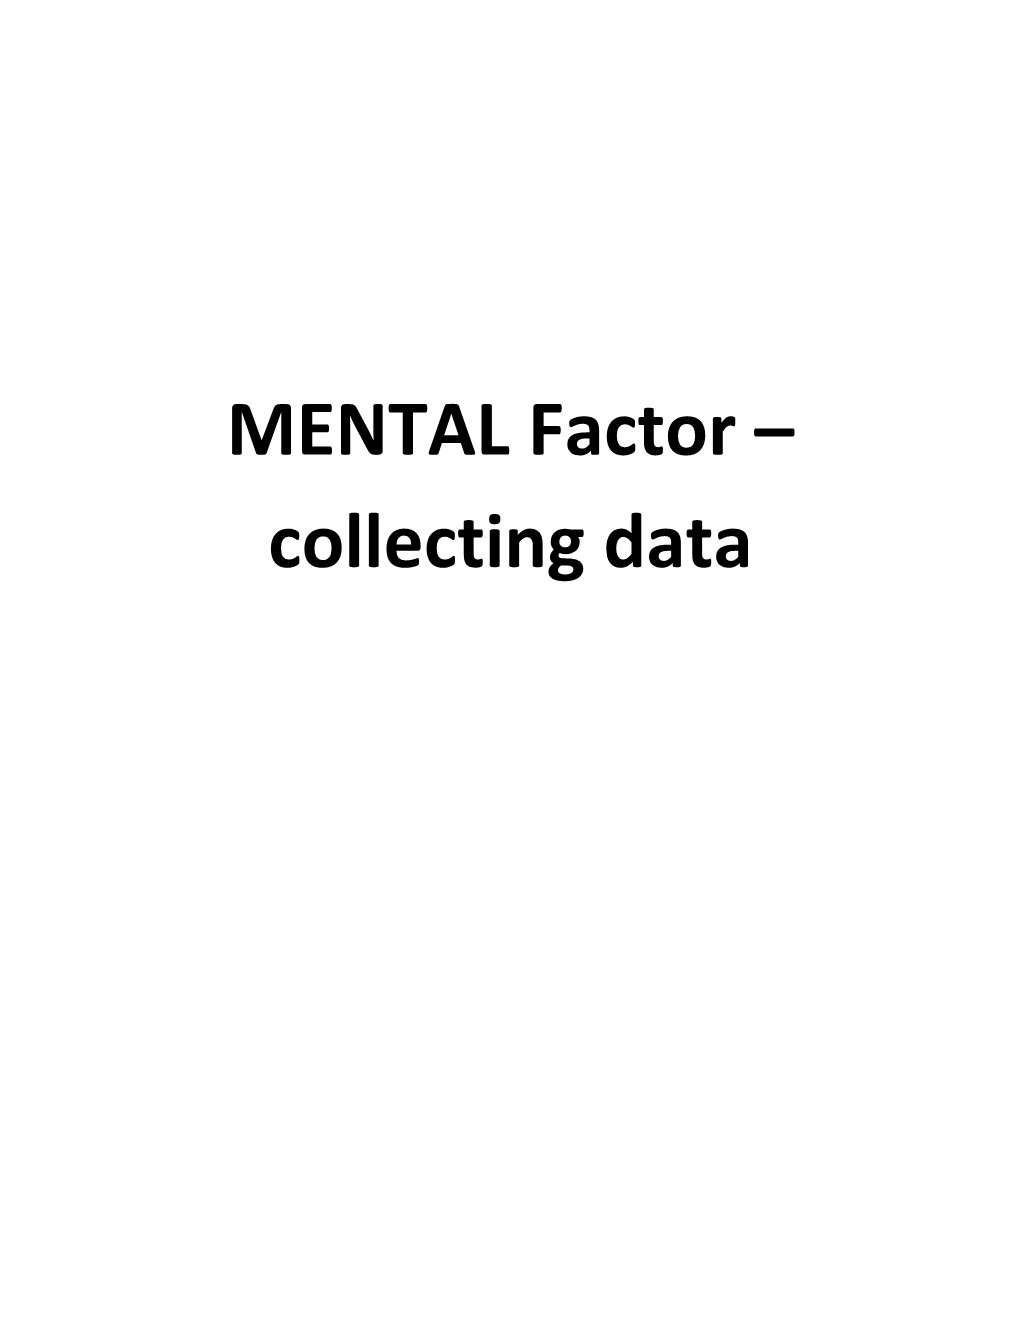 MENTAL Factor Collecting Data